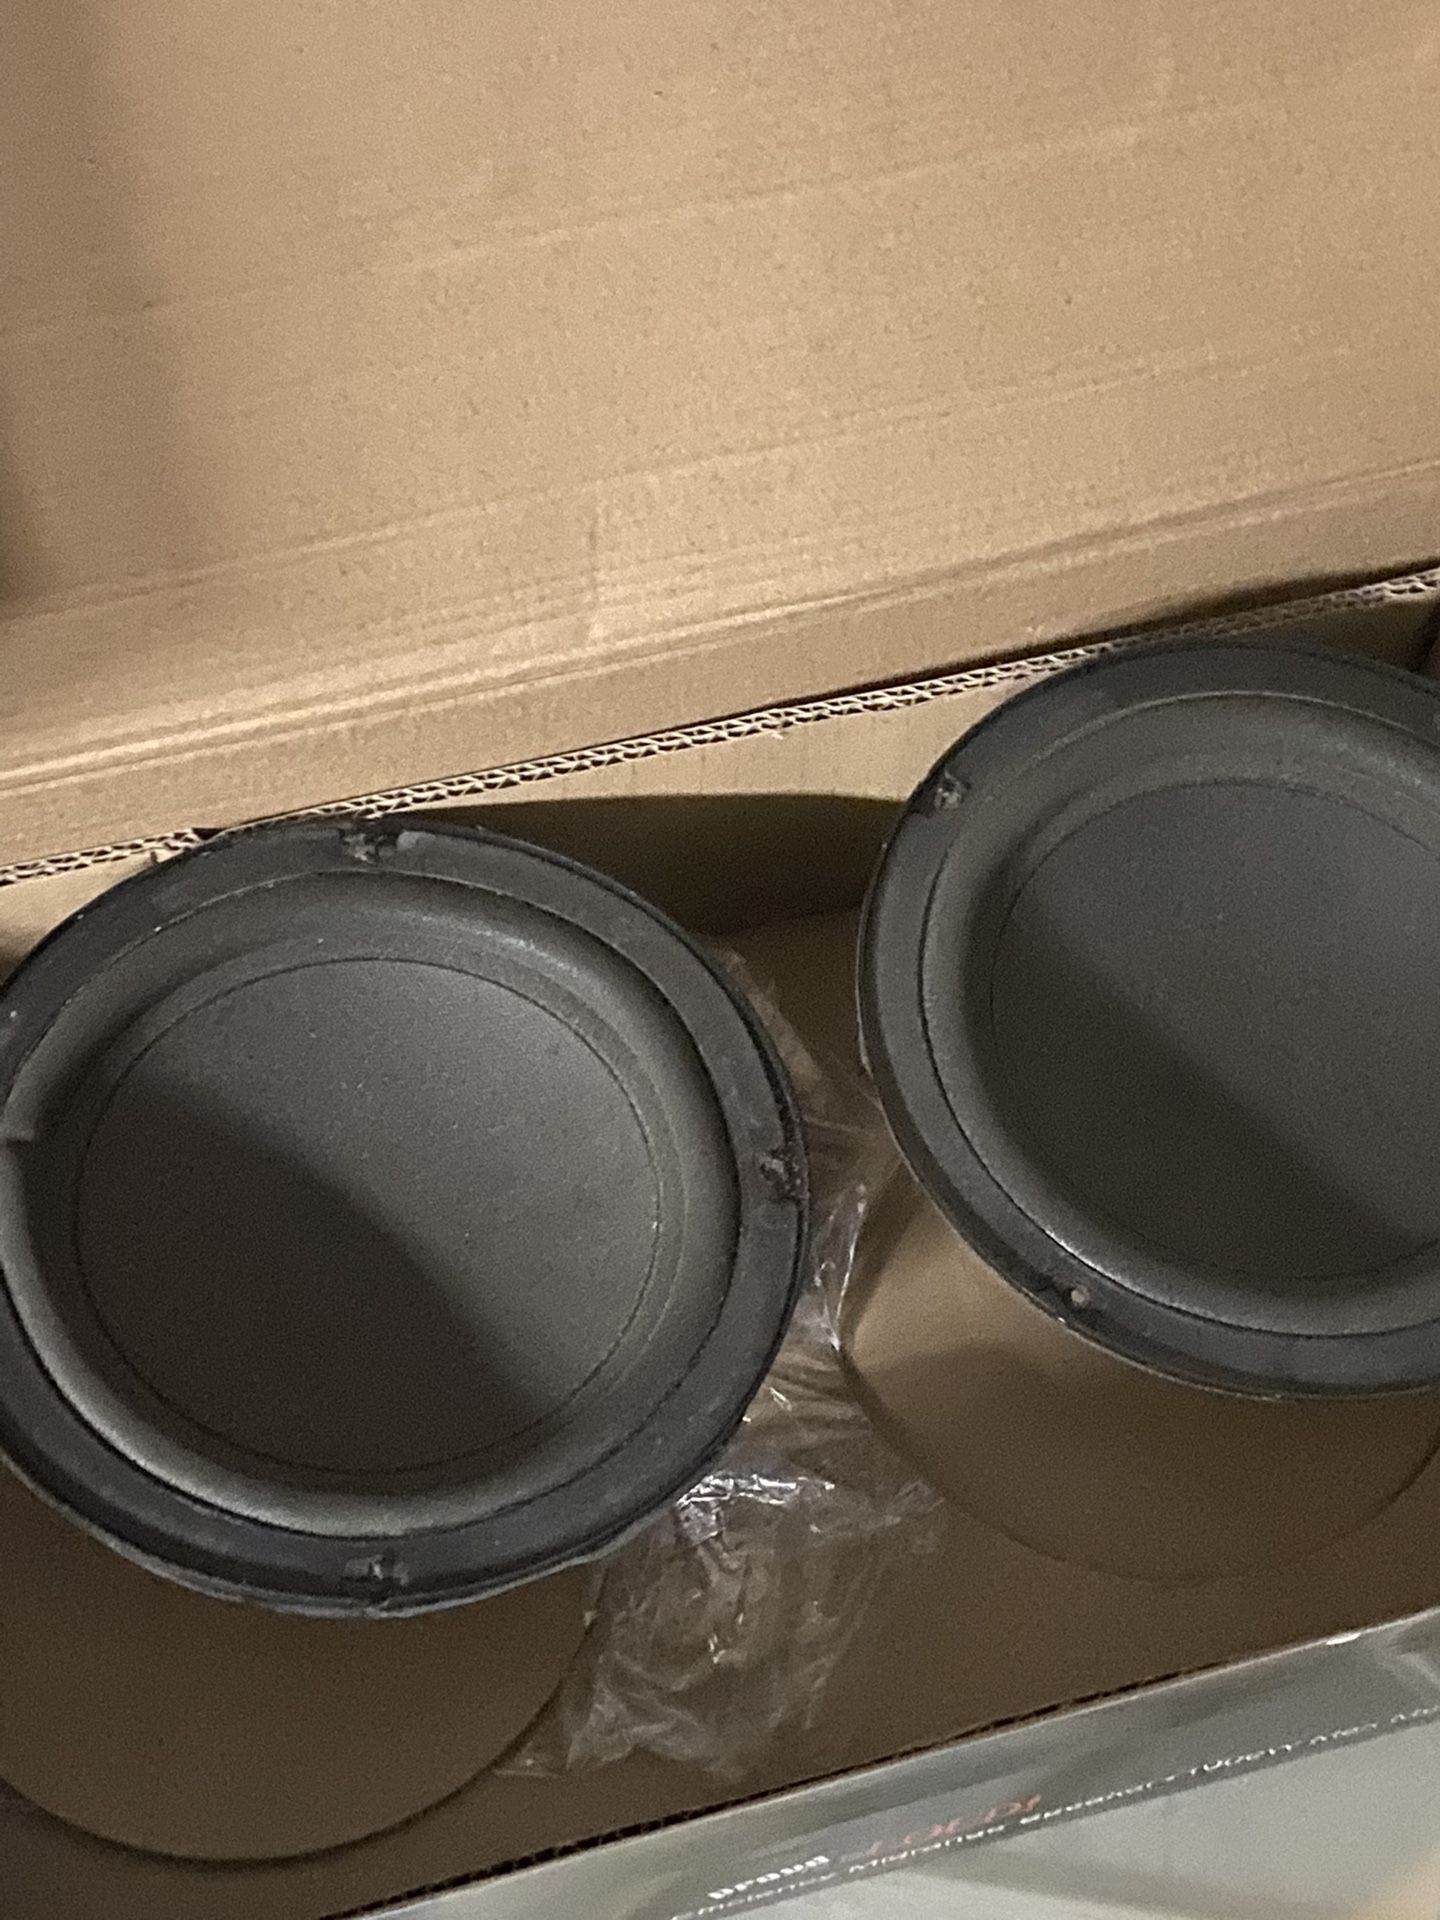 2 speakers 4ohm